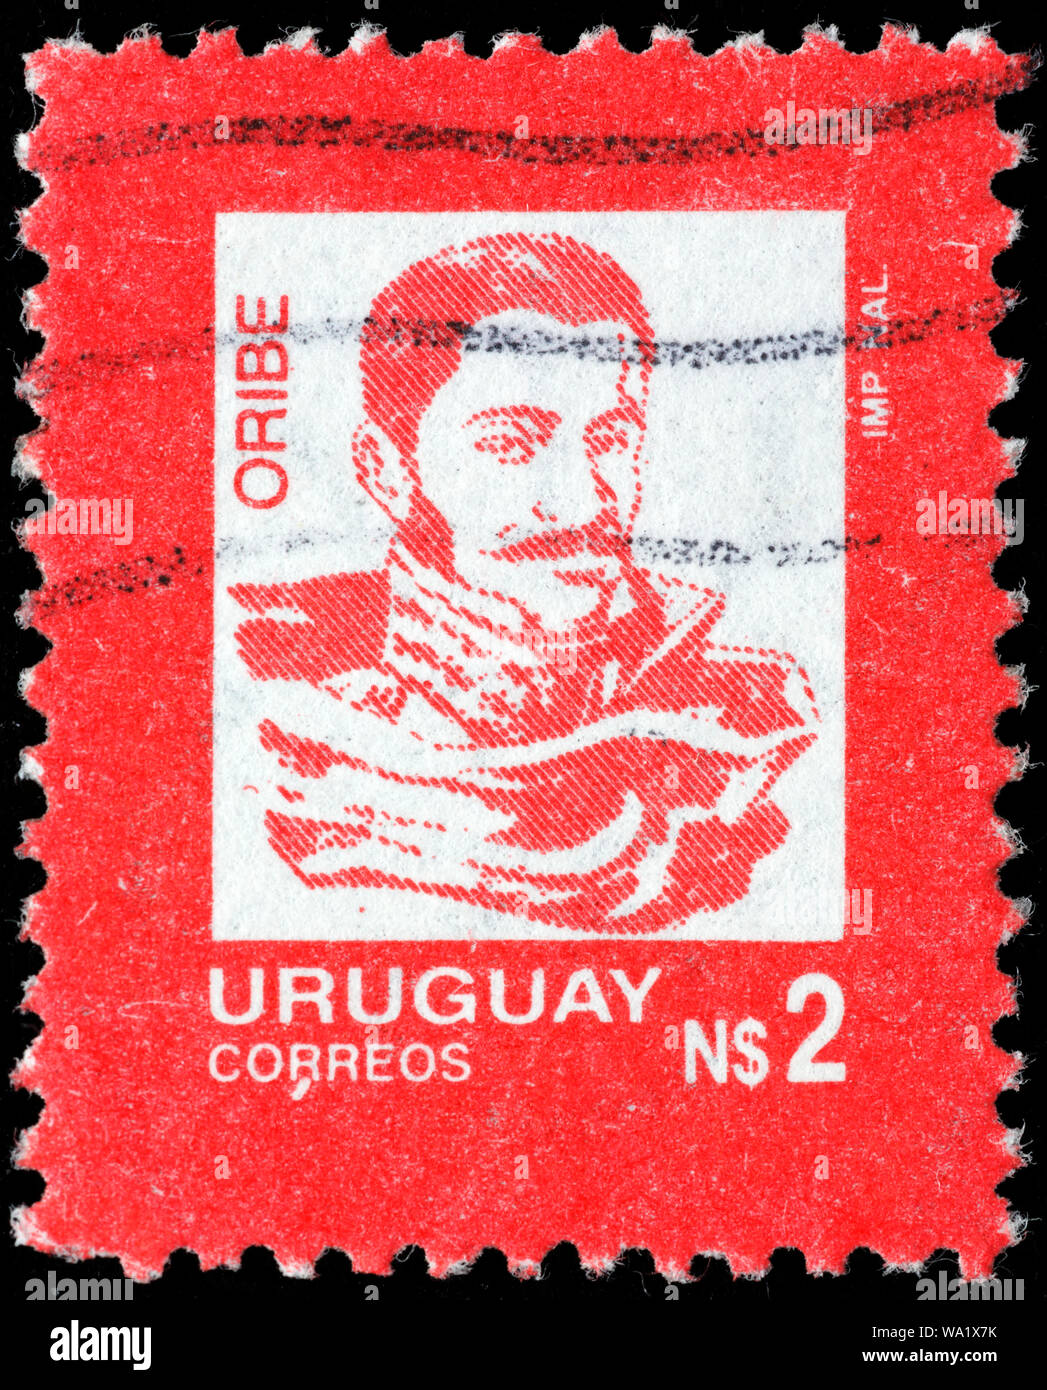 Manuel Oribe (1835-1838), President of Uruguay, postage stamp, Uruguay, 1987 Stock Photo